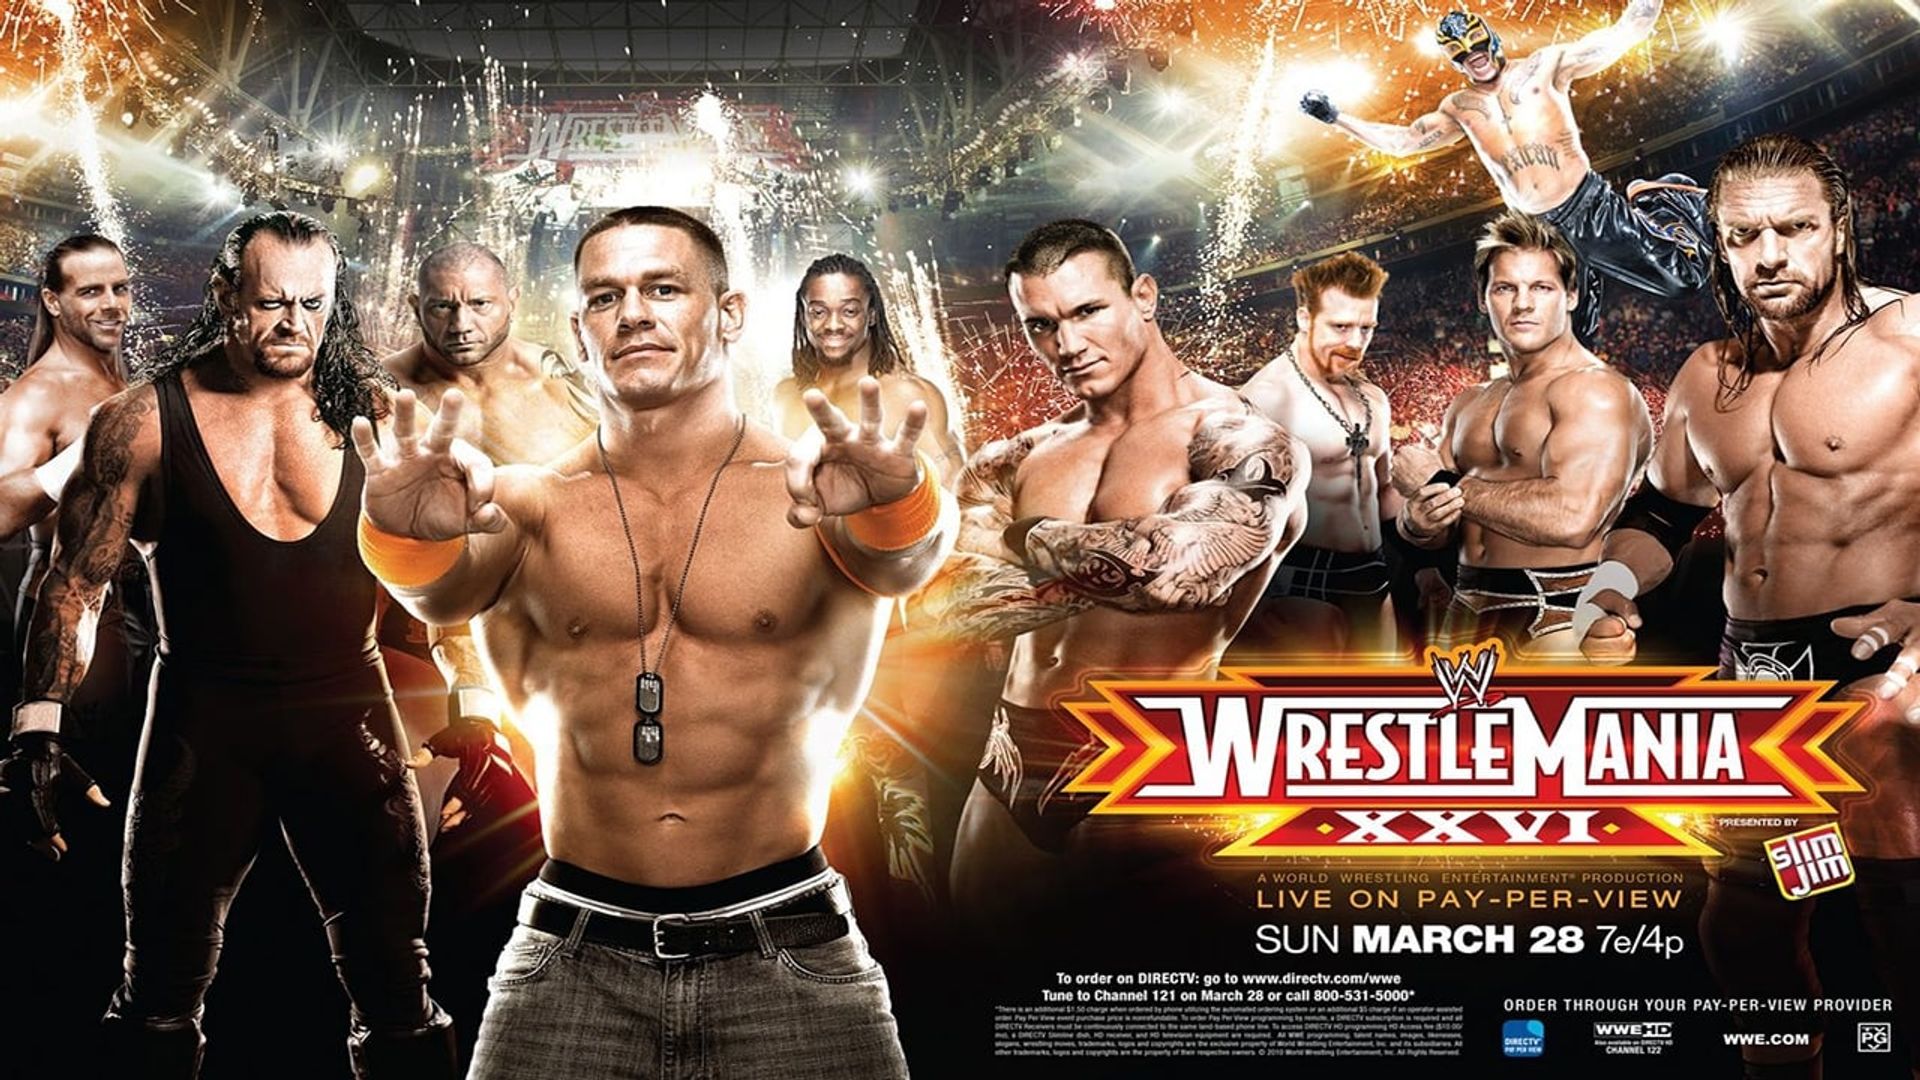 WrestleMania XXVI background